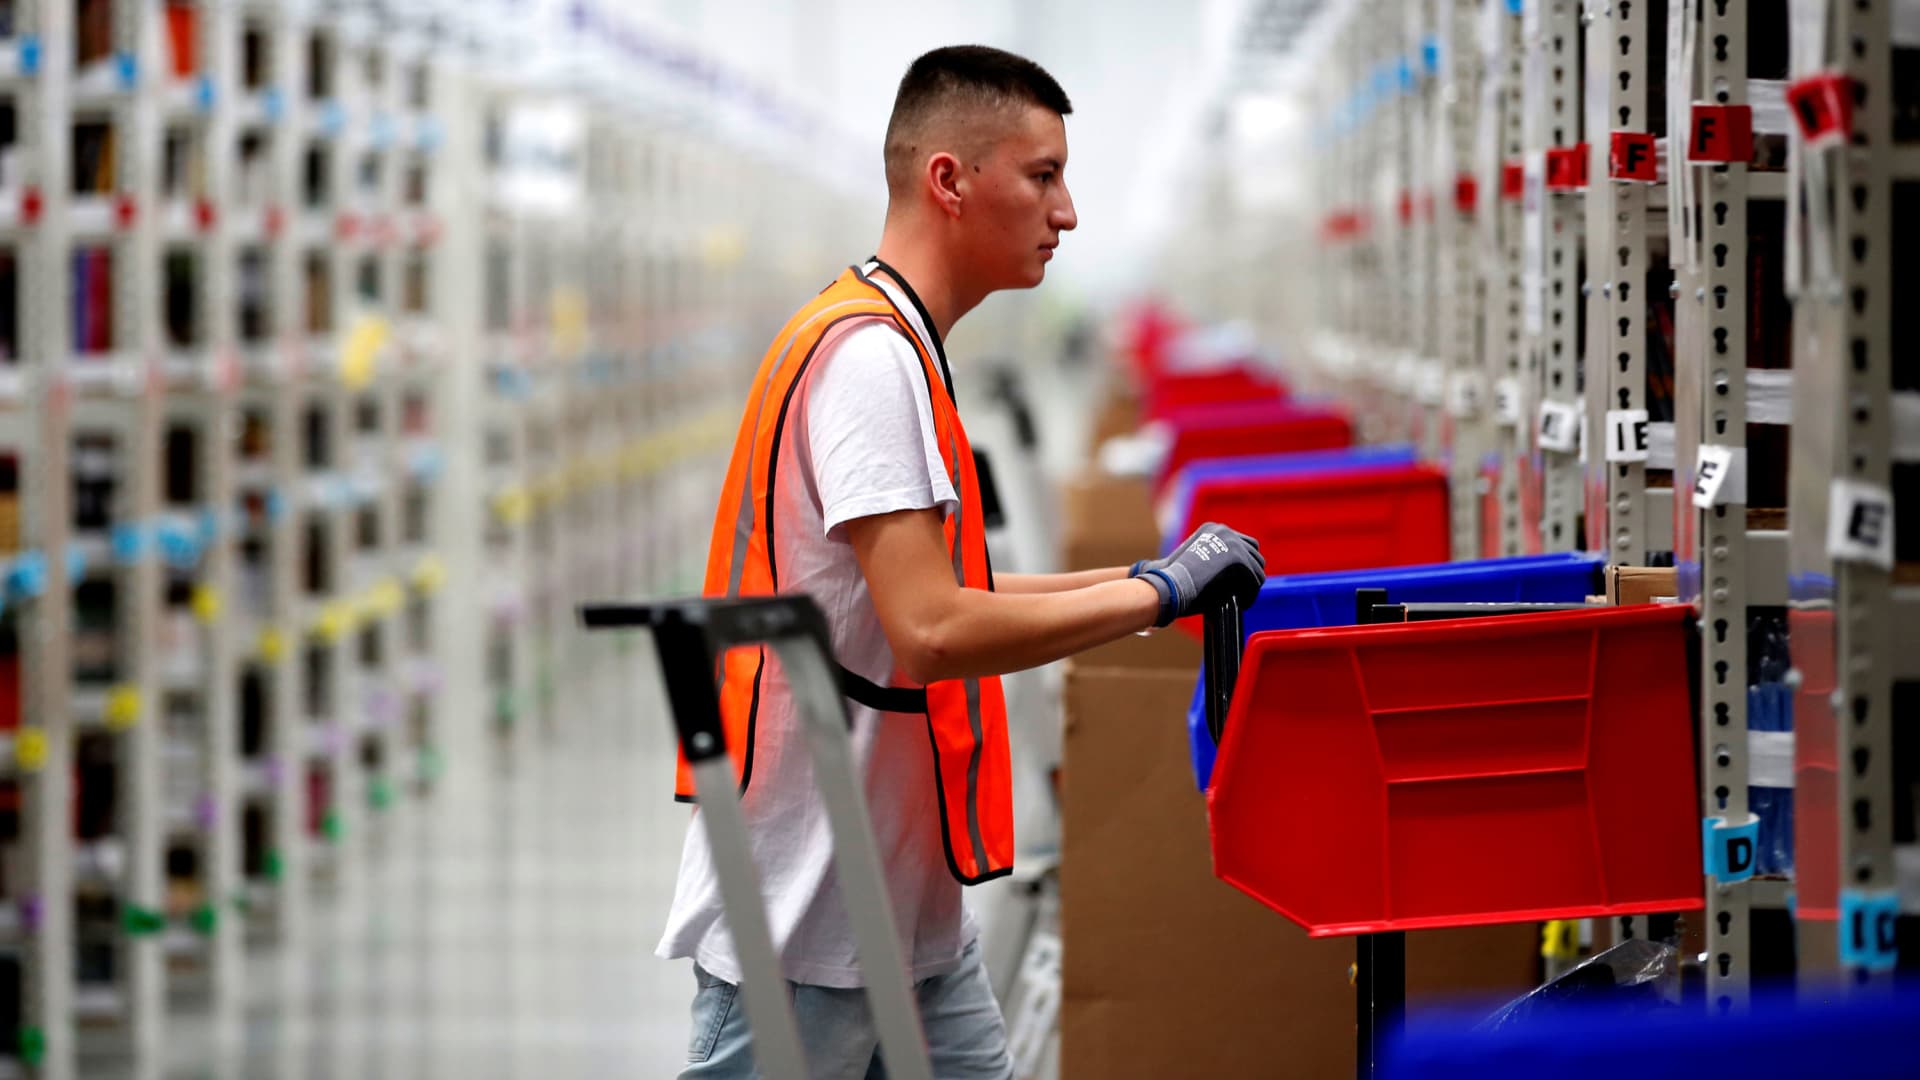 Amazon’s focus on speed, surveillance drives worker injuries